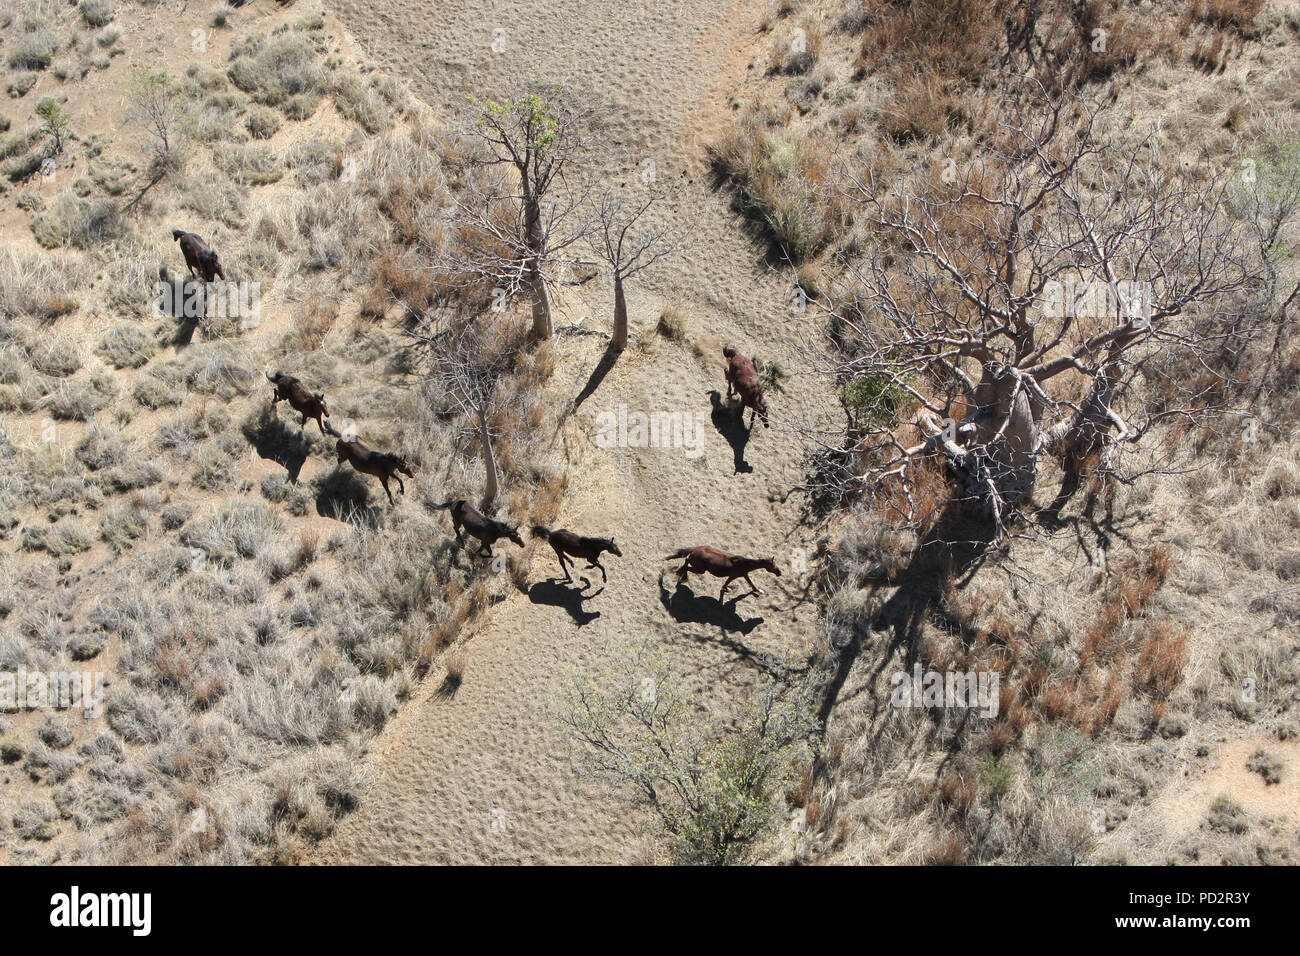 Wild horses cross a creek bed, Kimberley Region, Western Australia Stock Photo